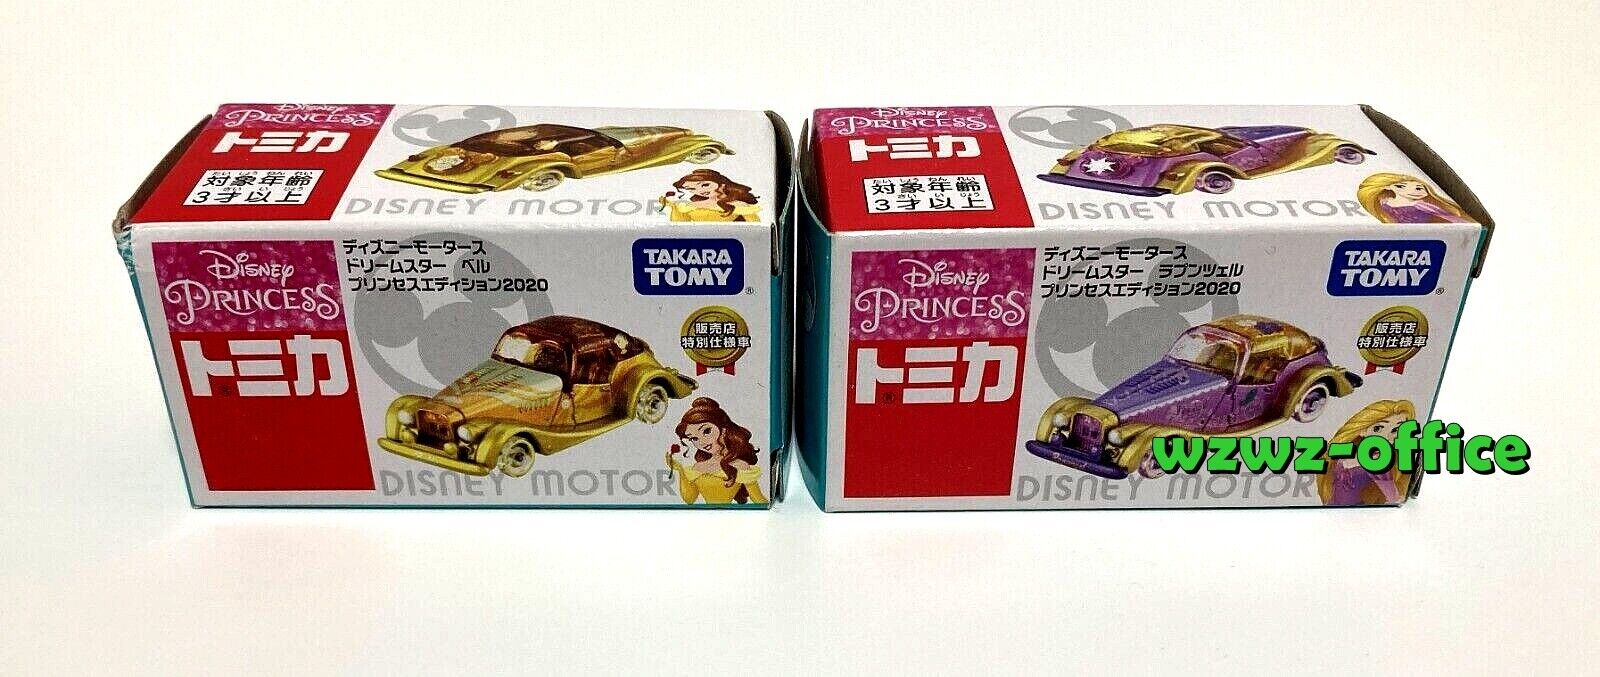 Tomica Disney Motors Dream Star Lot/Set 2 Toy Cars PRINCESS EDITION 2020 Japan J